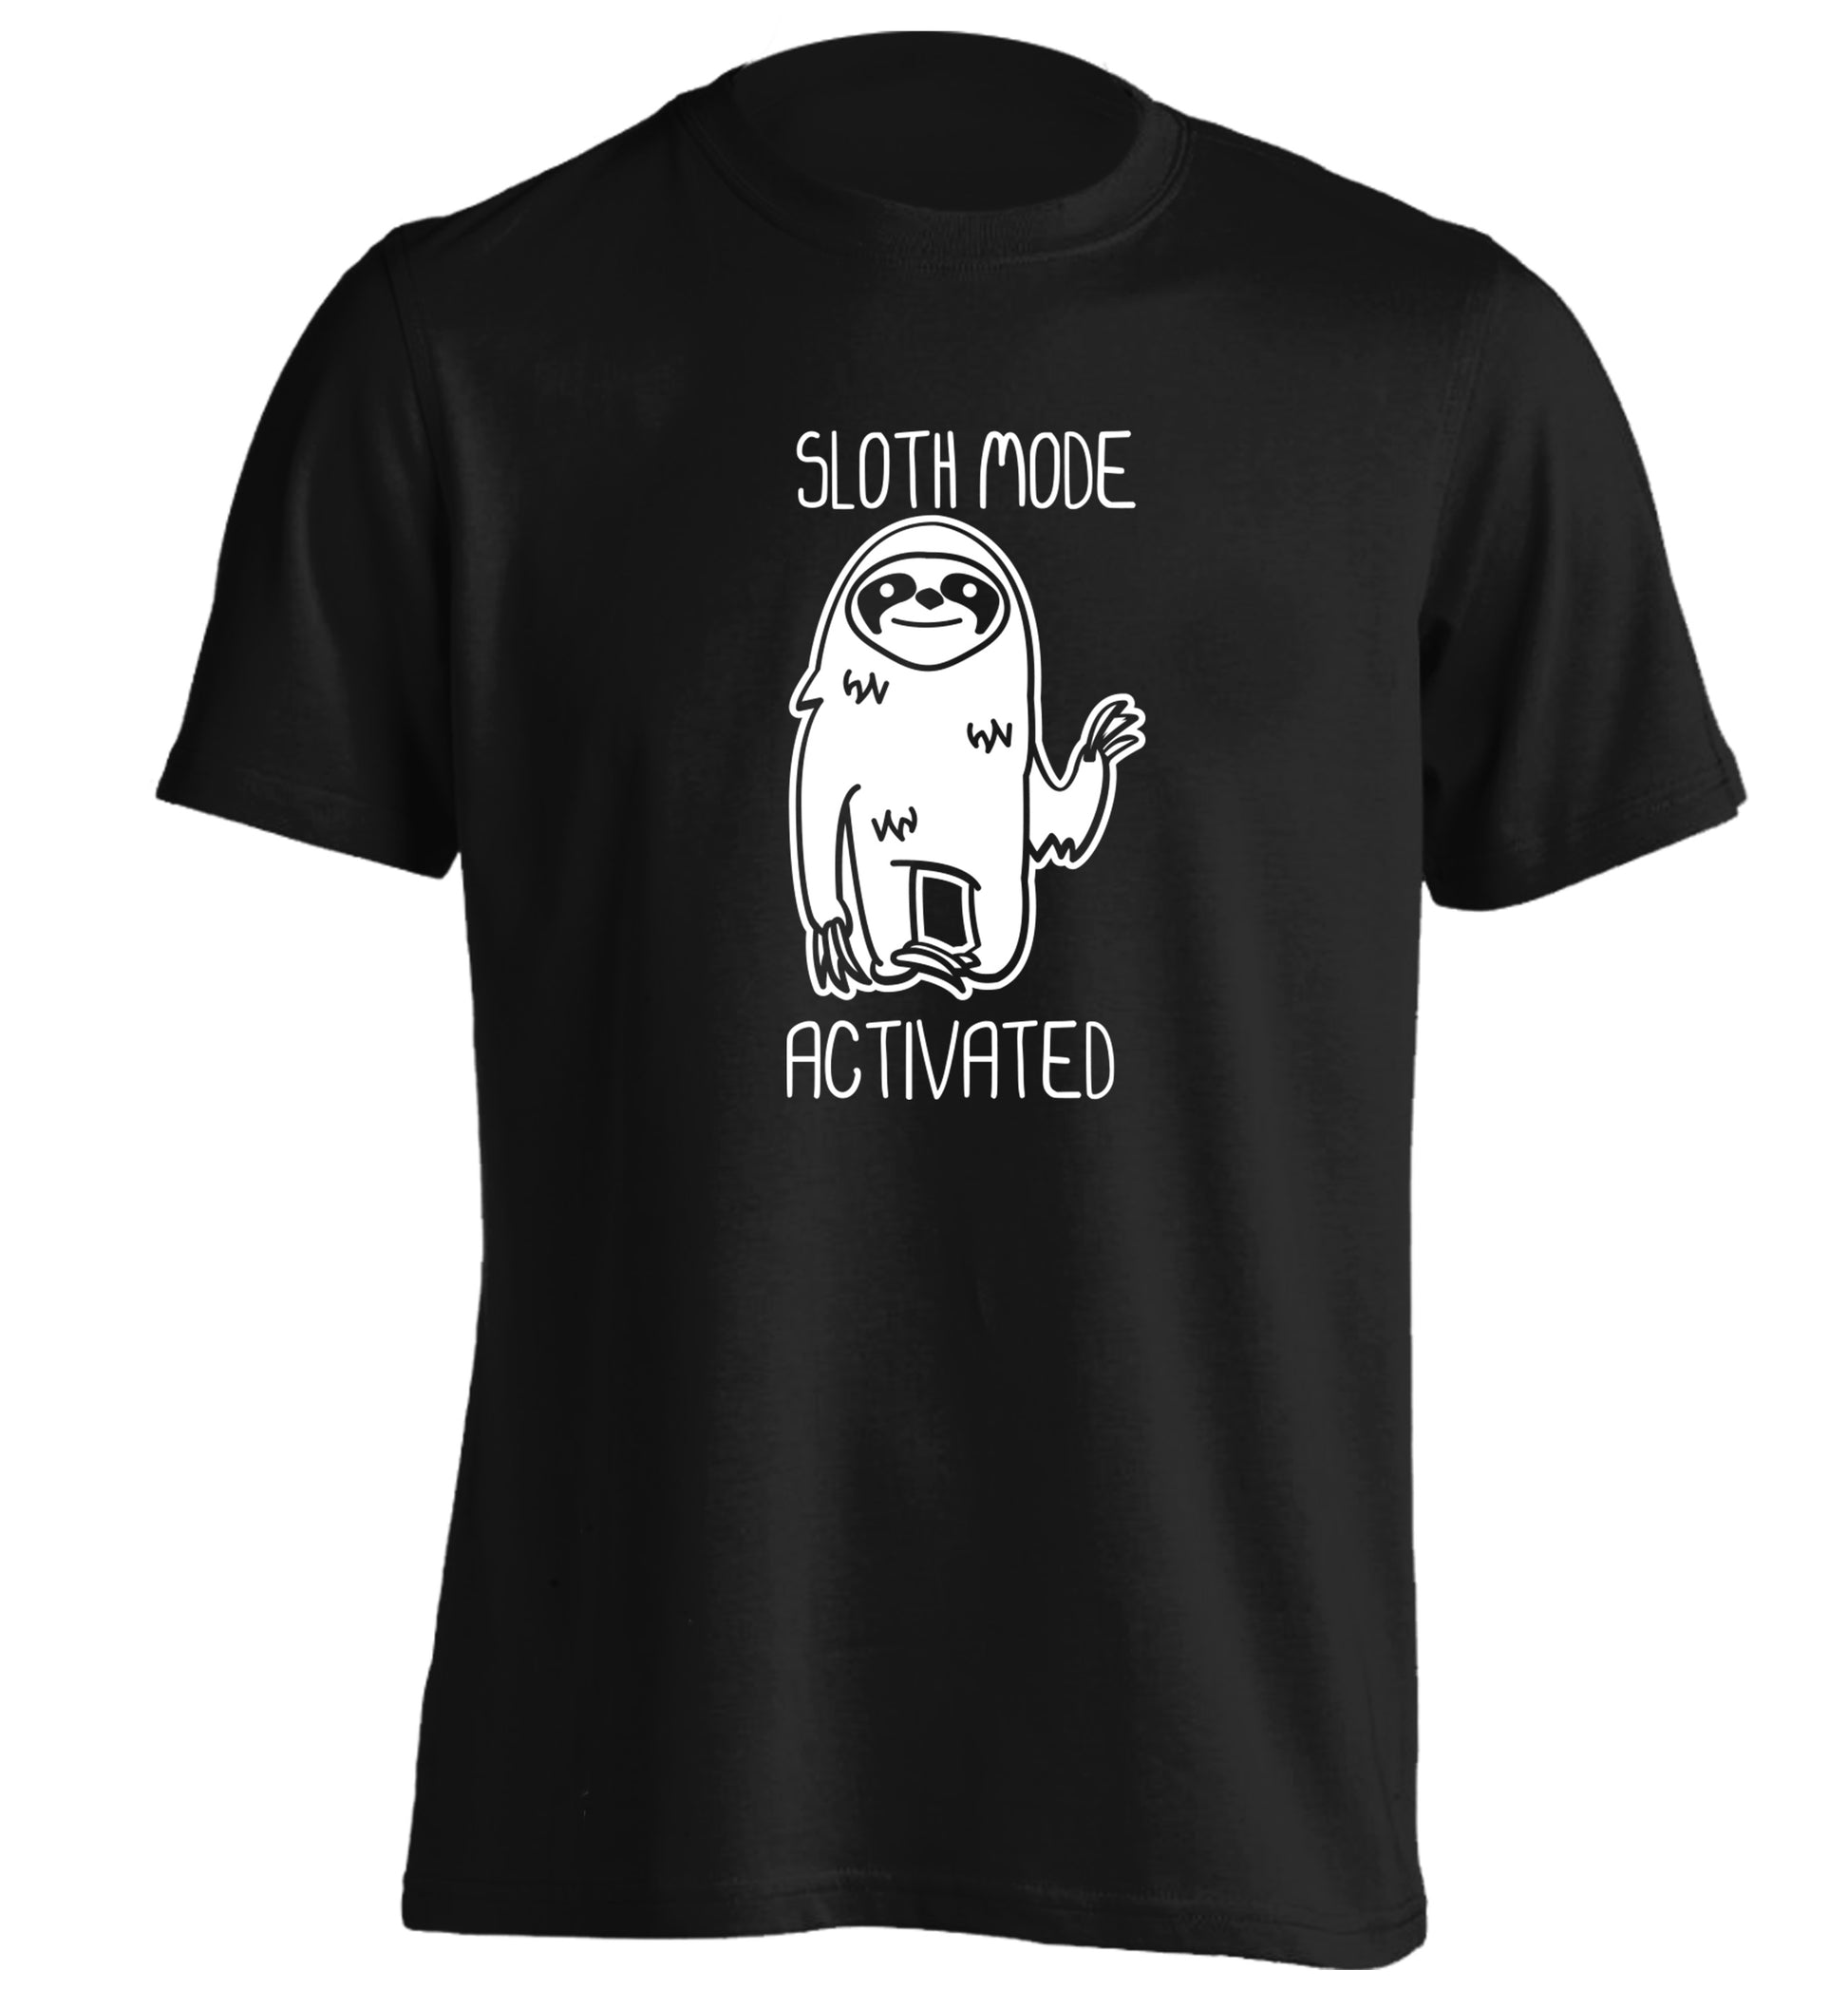 Sloth mode acitvated adults unisex black Tshirt 2XL